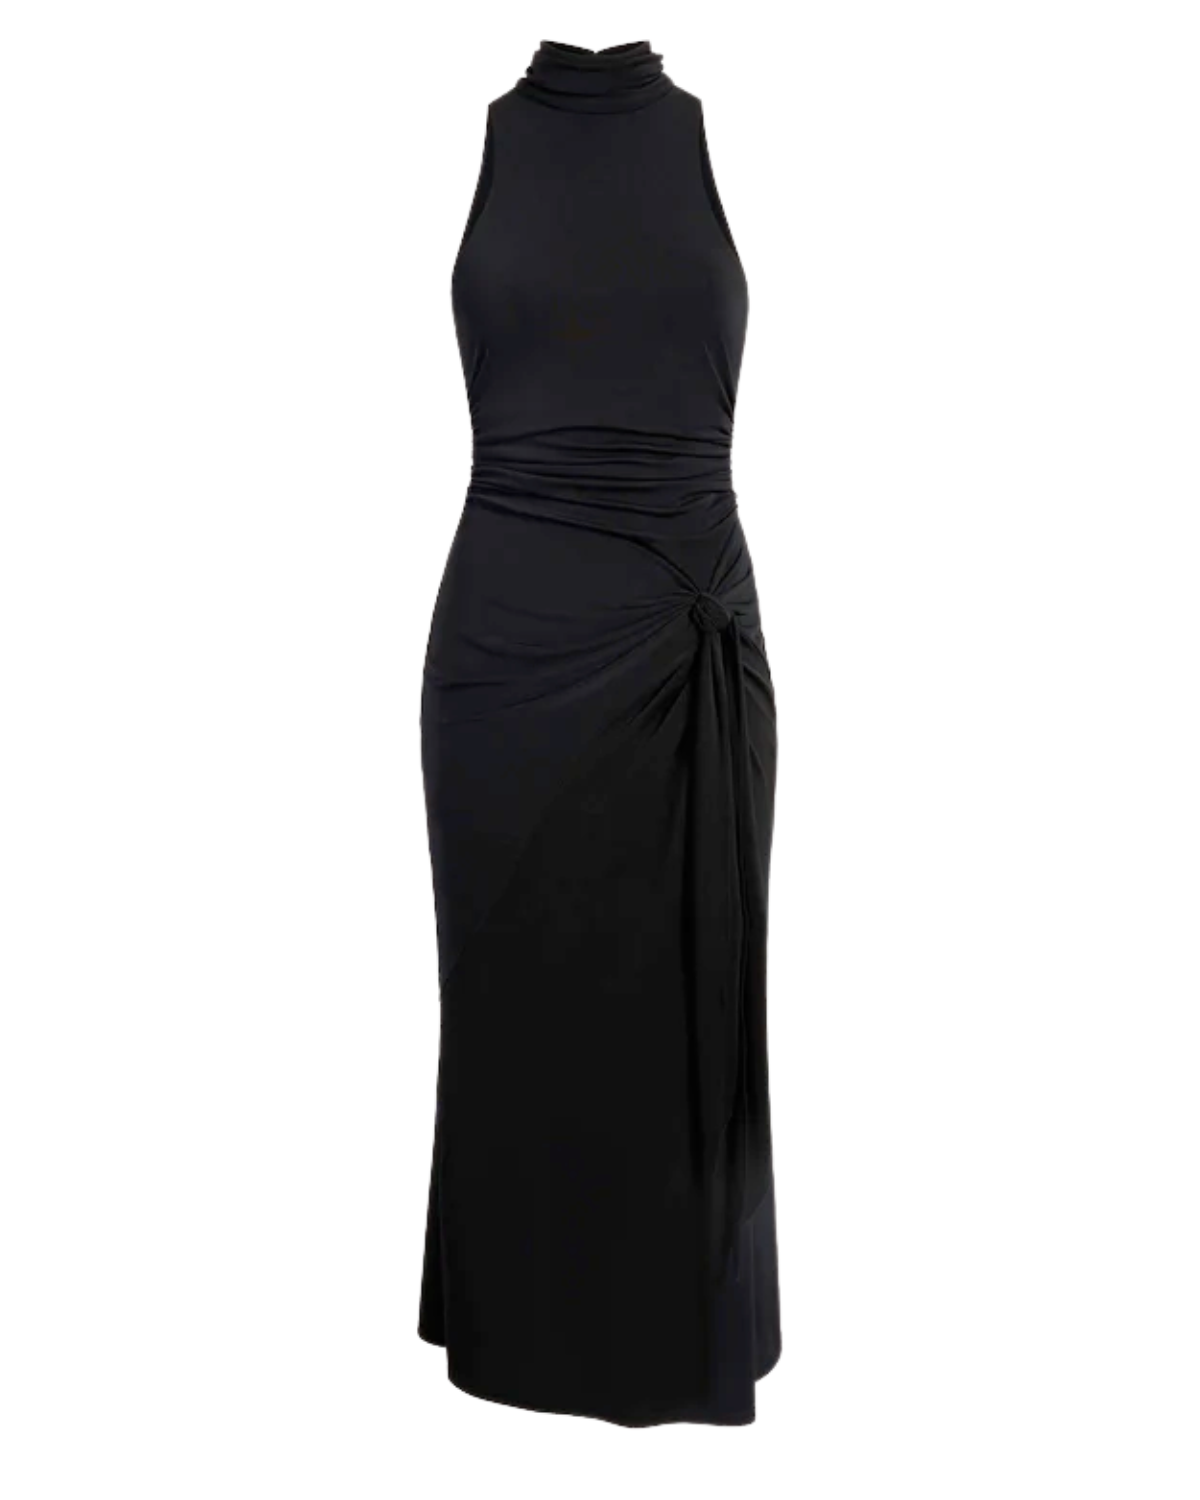 Rori Sleeveless Turtleneck Dress (Black)